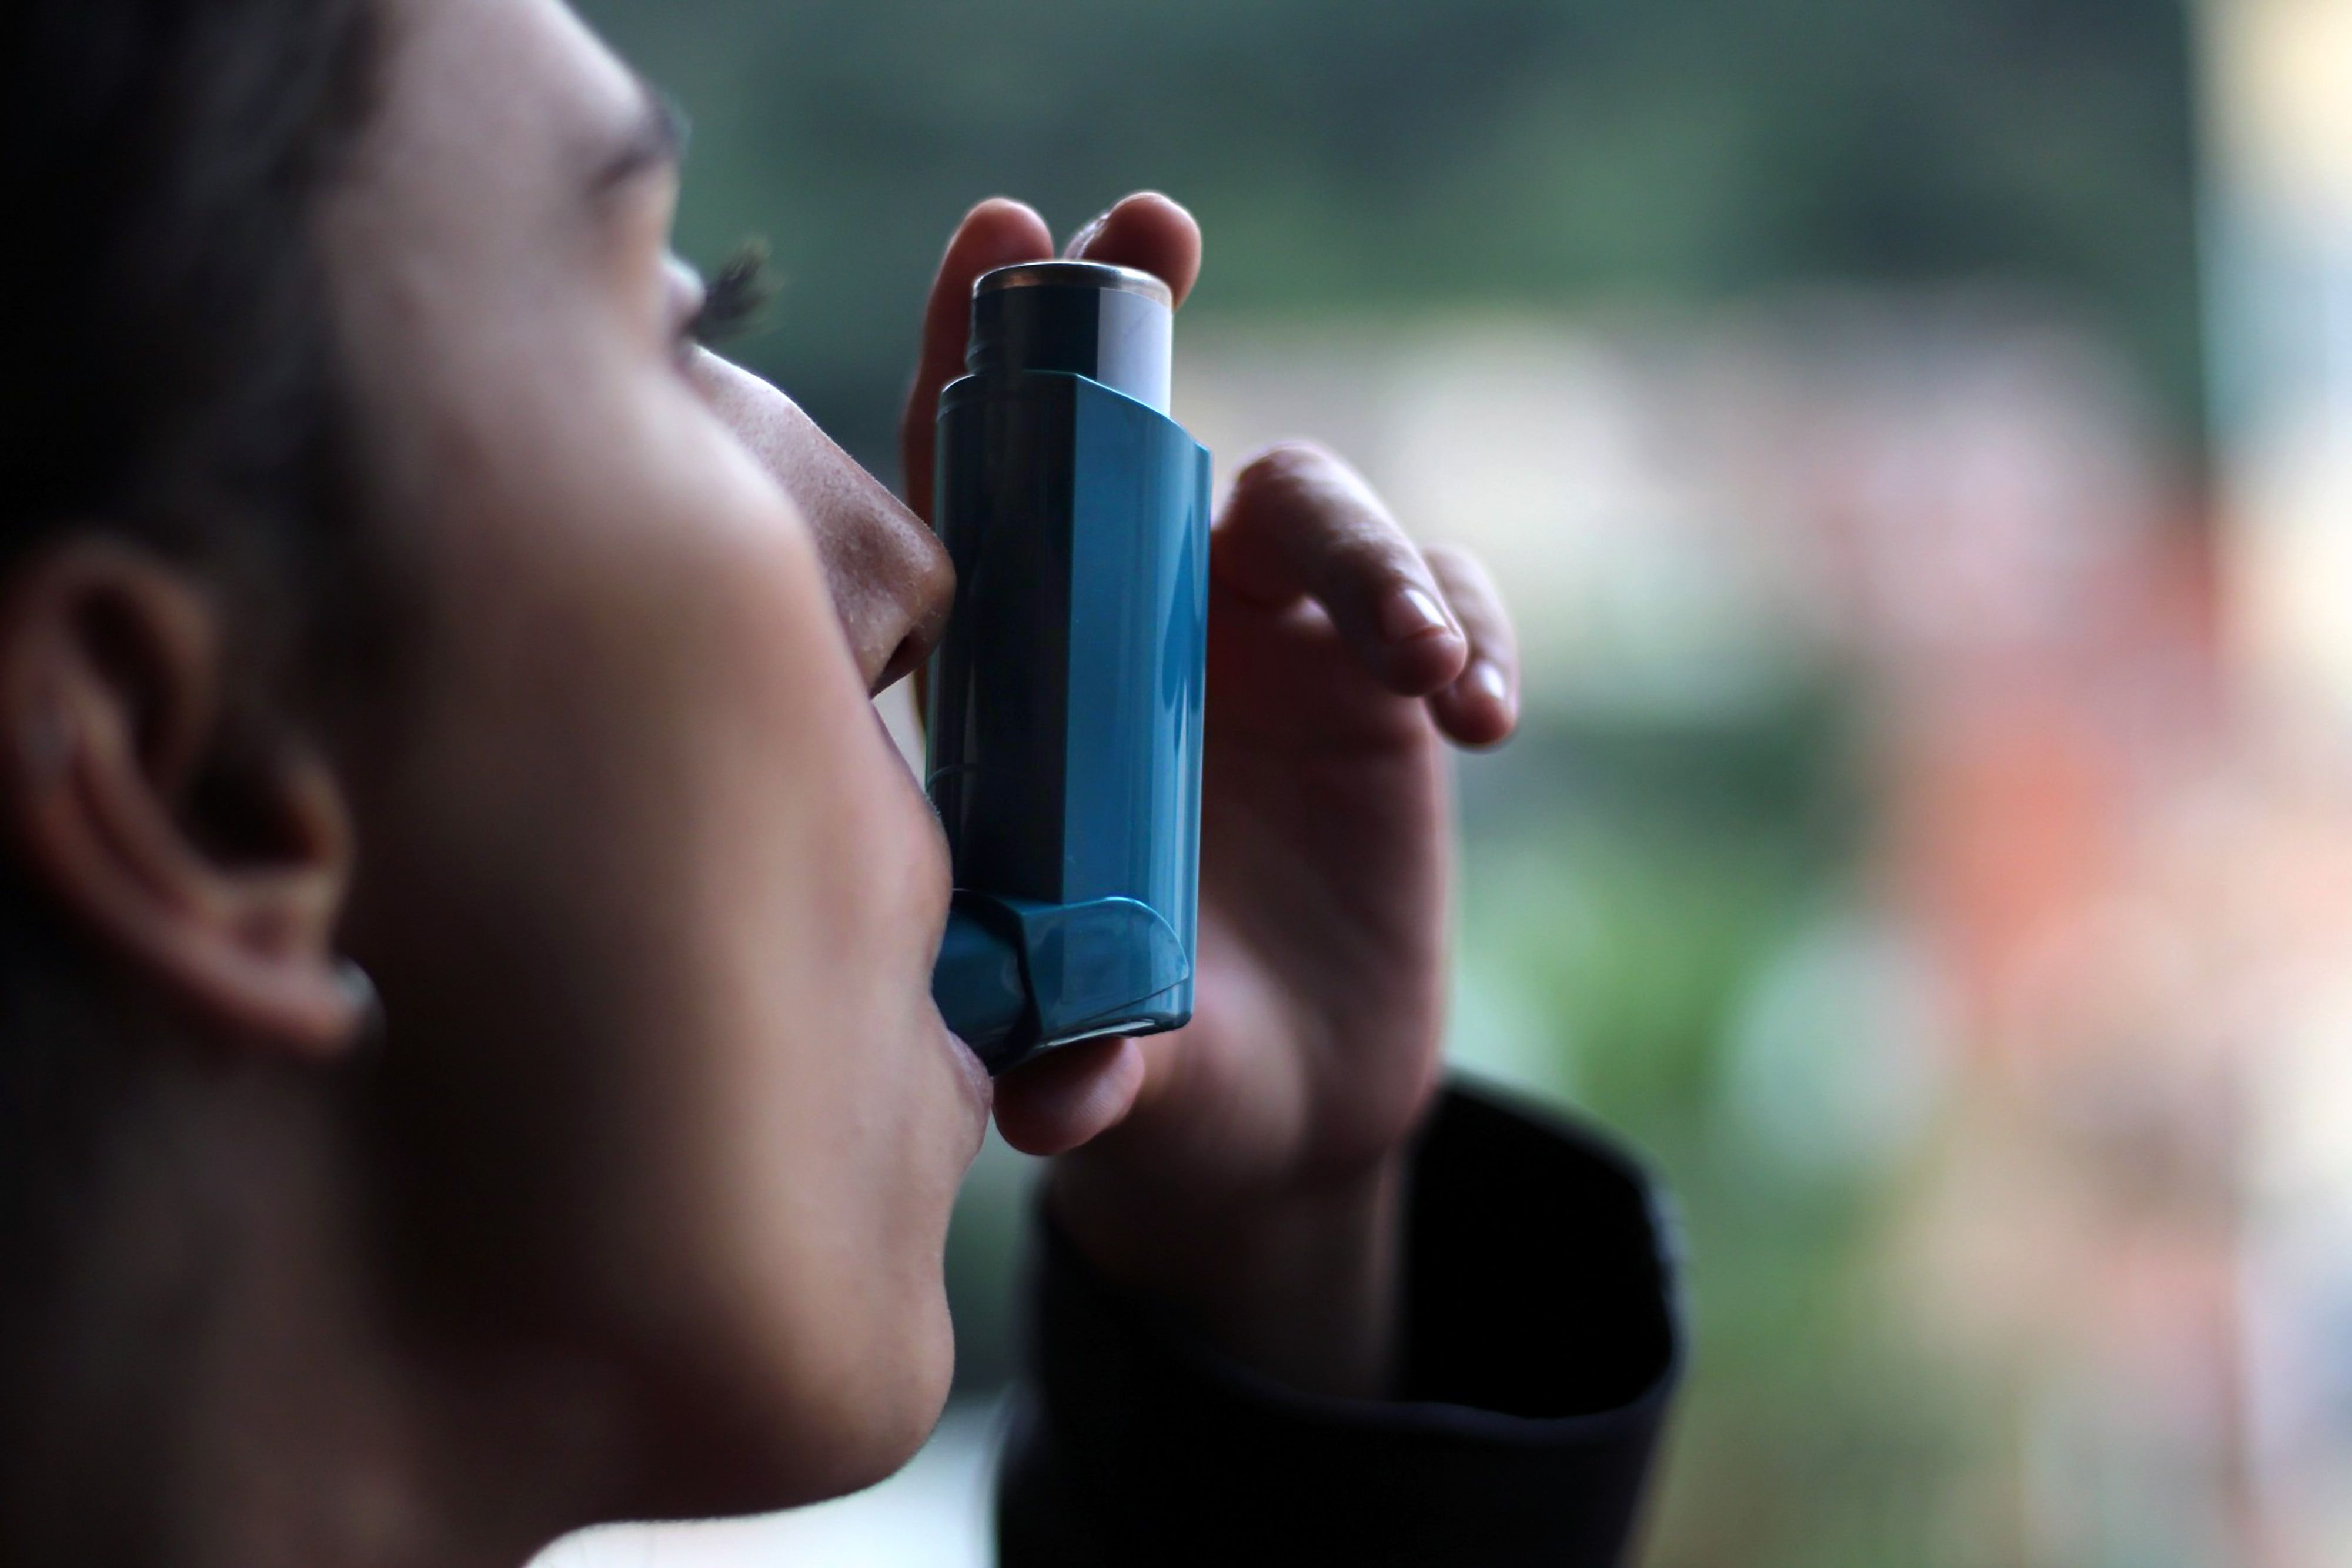 Female patient using inhaler | Image Credit: DALU11 - stock.adobe.com